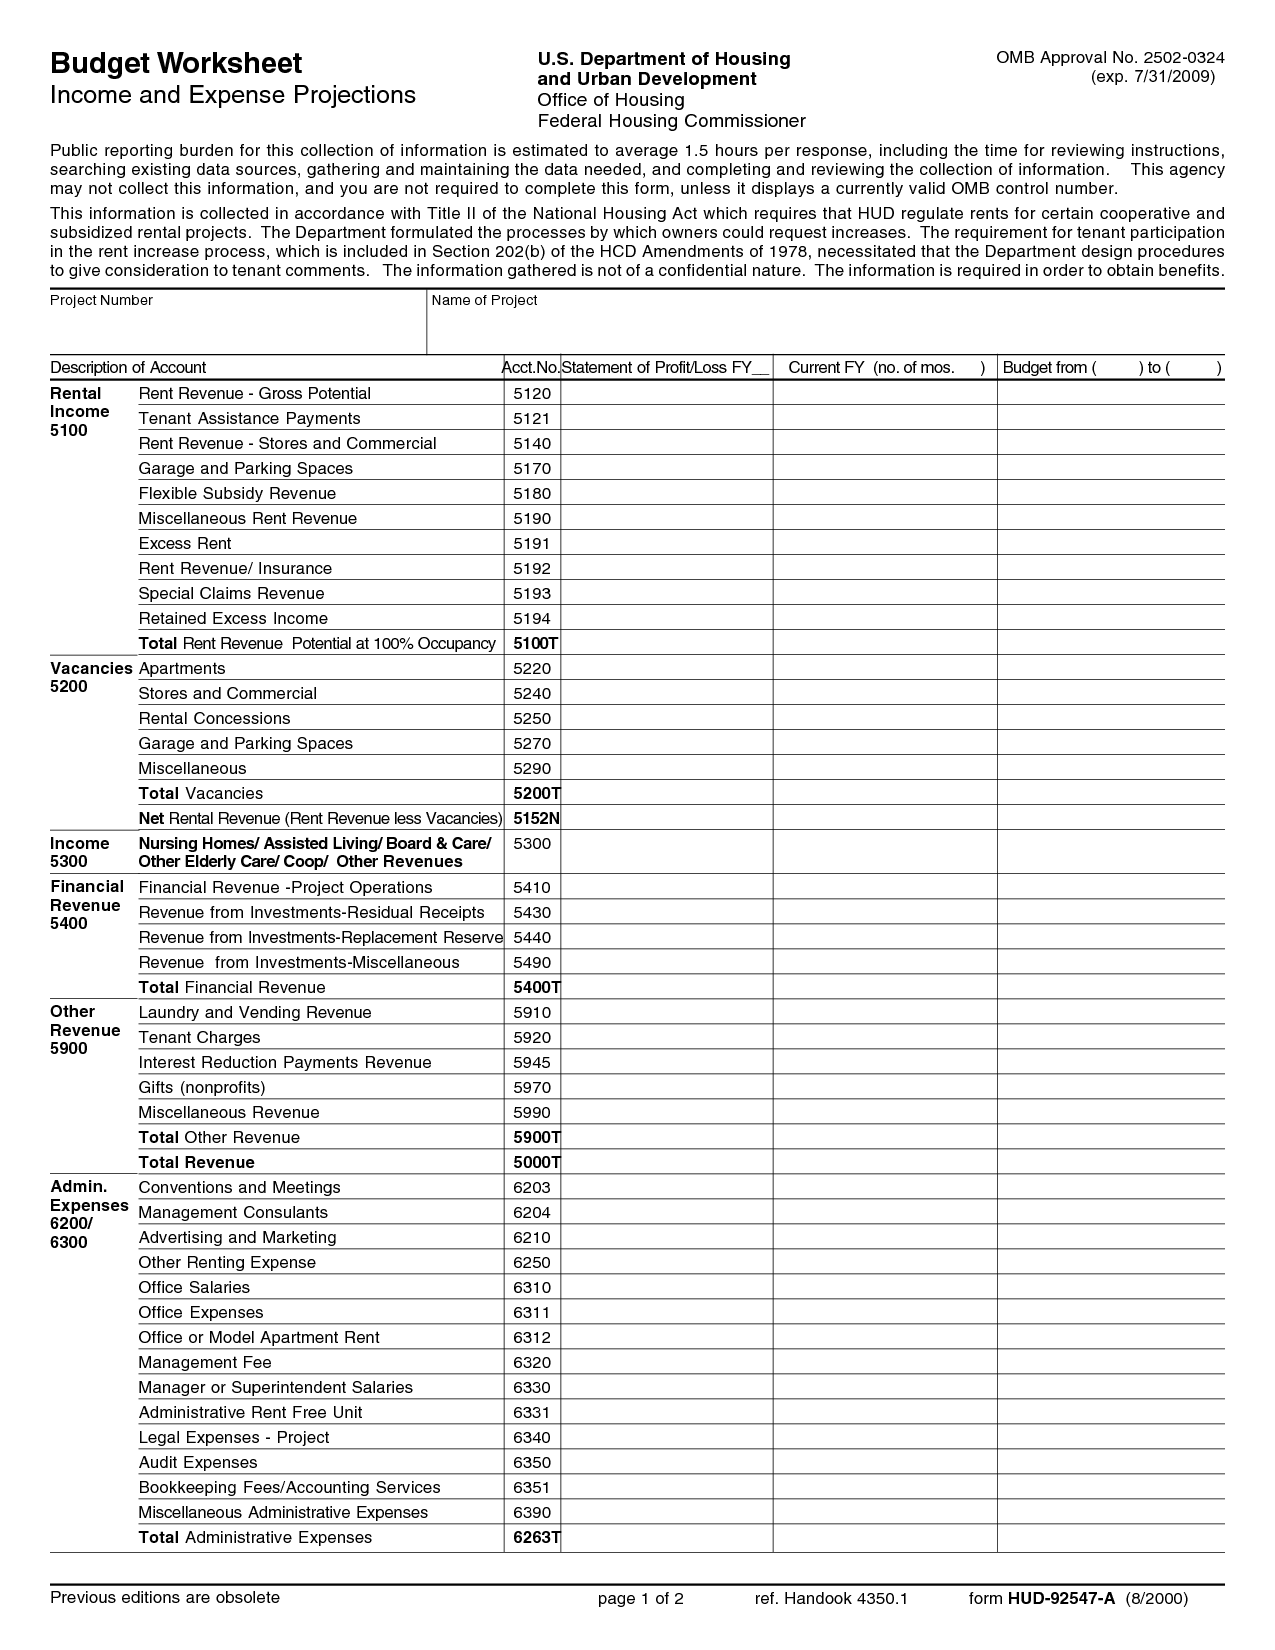 Printable Budget Worksheets